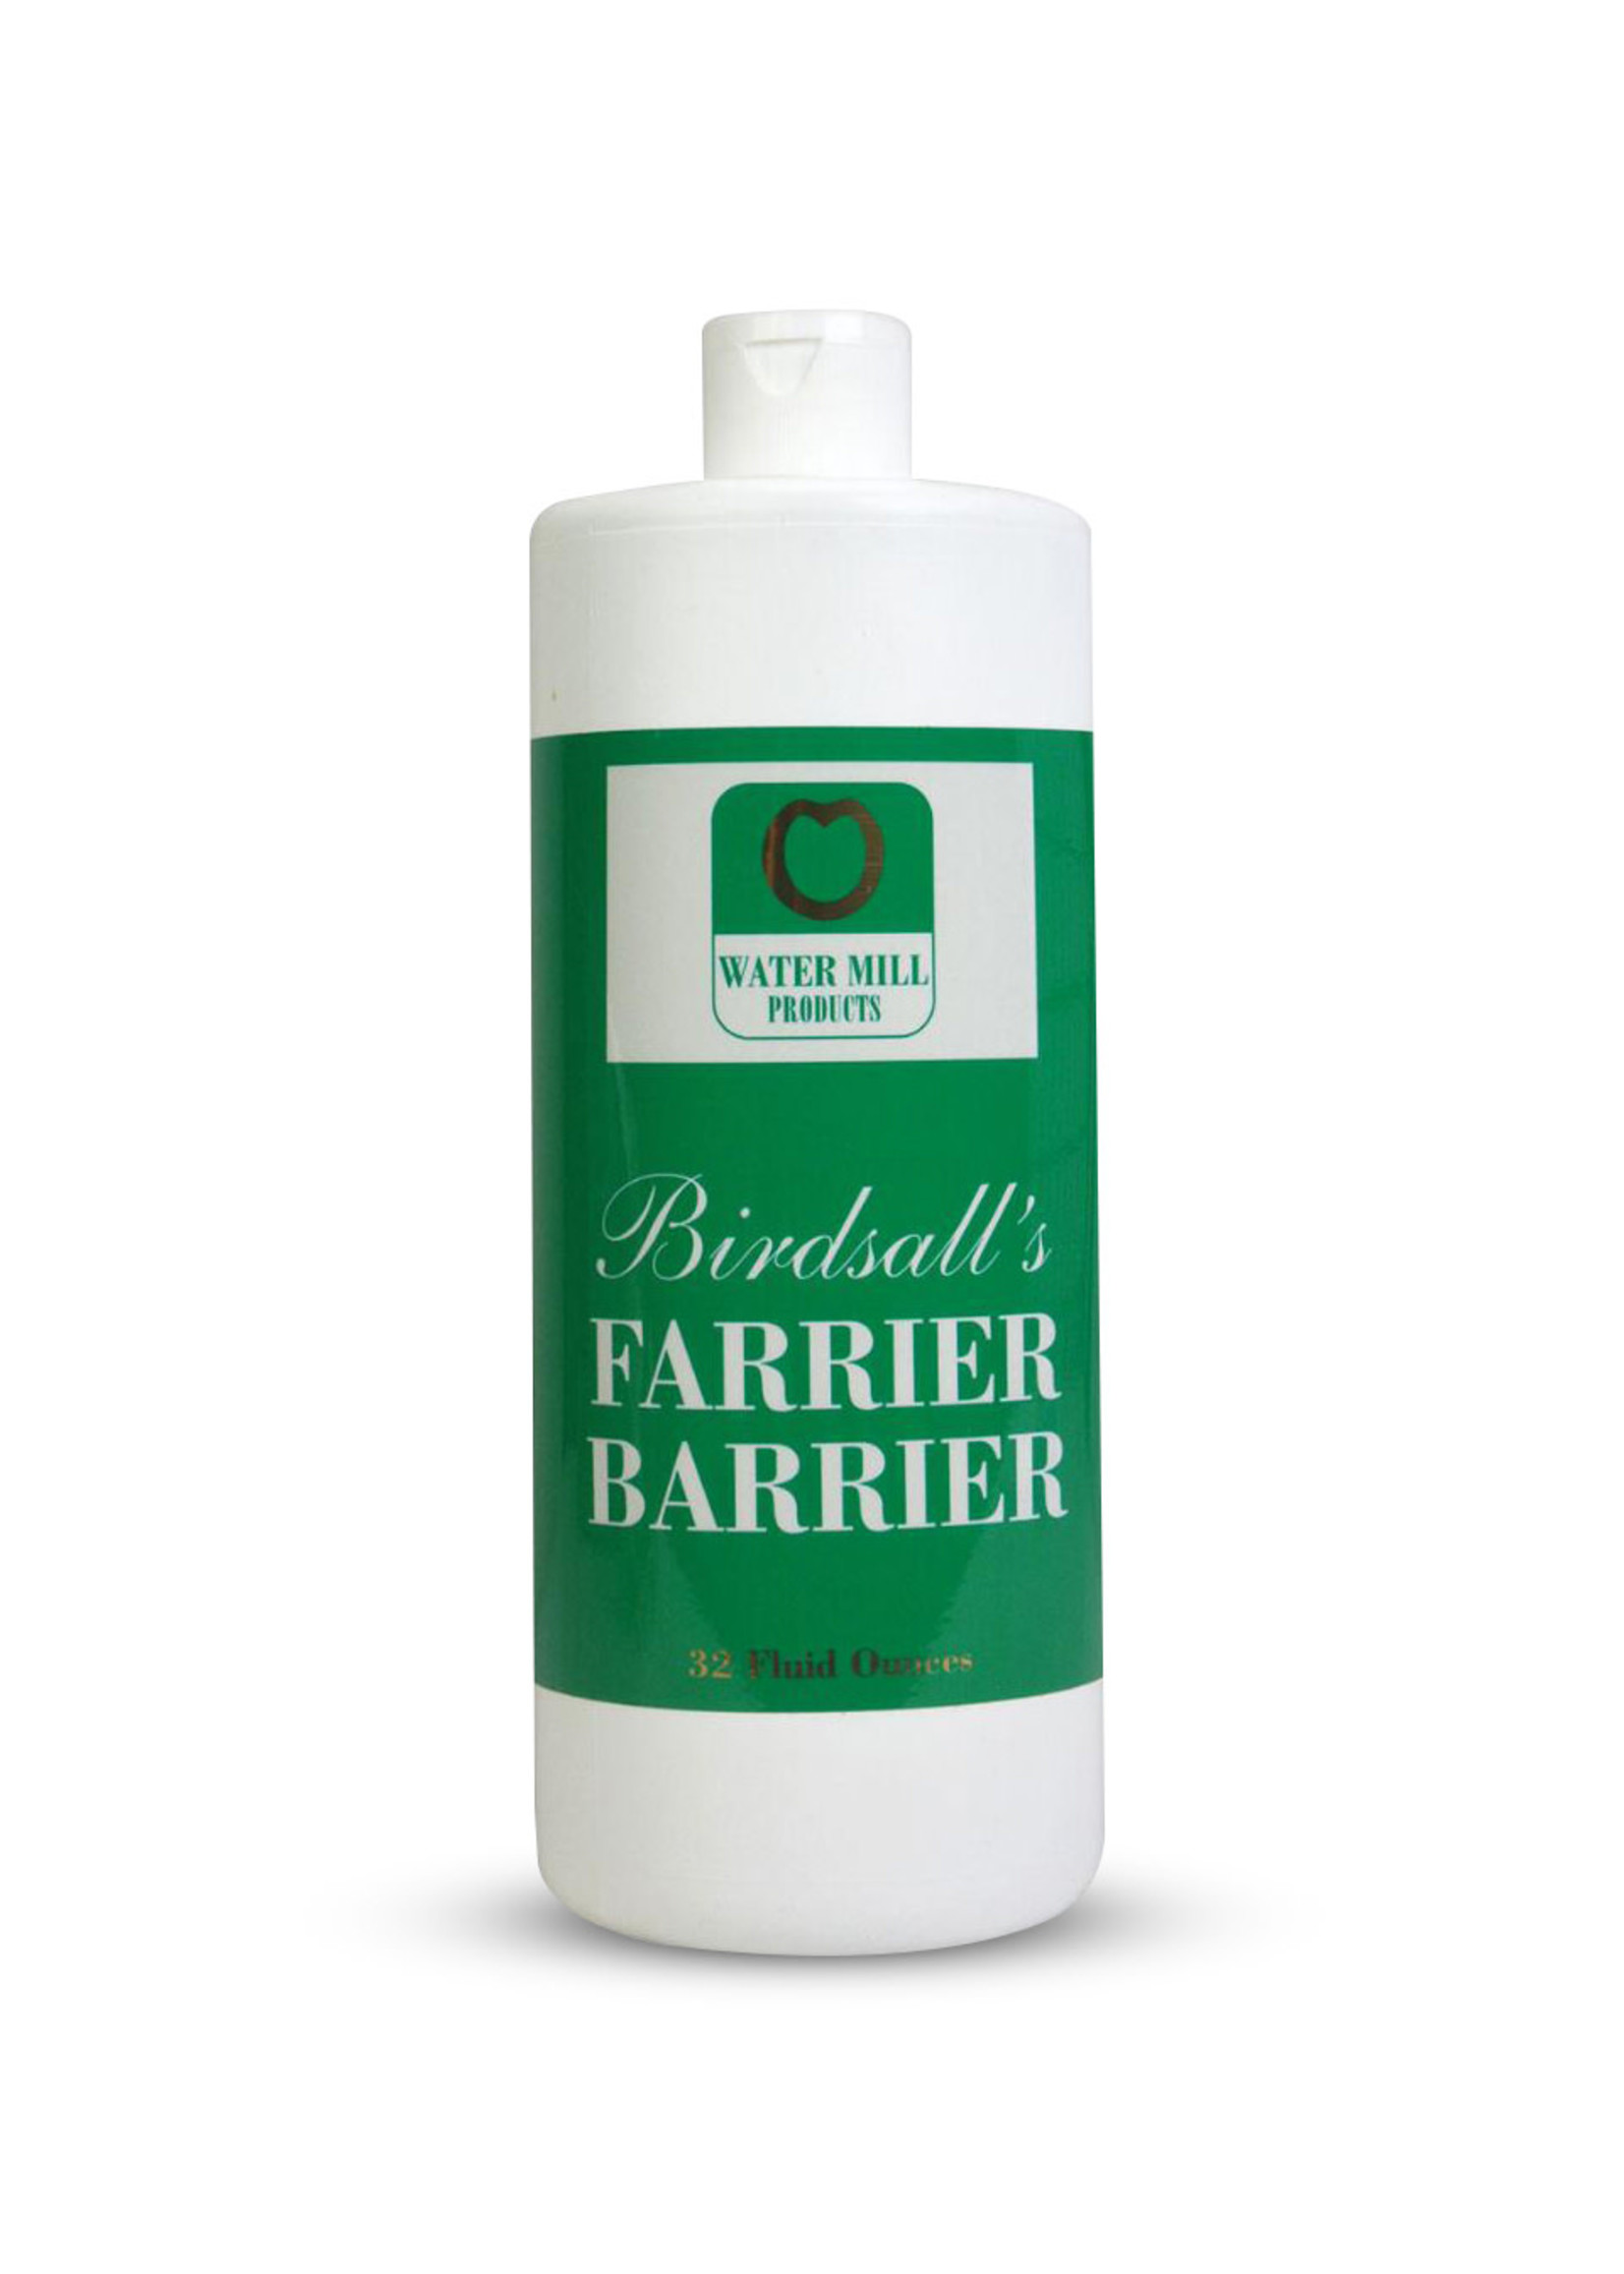 Farrier Barrier Birdsall's Farrier Barrier 32 oz. Refill Bottle